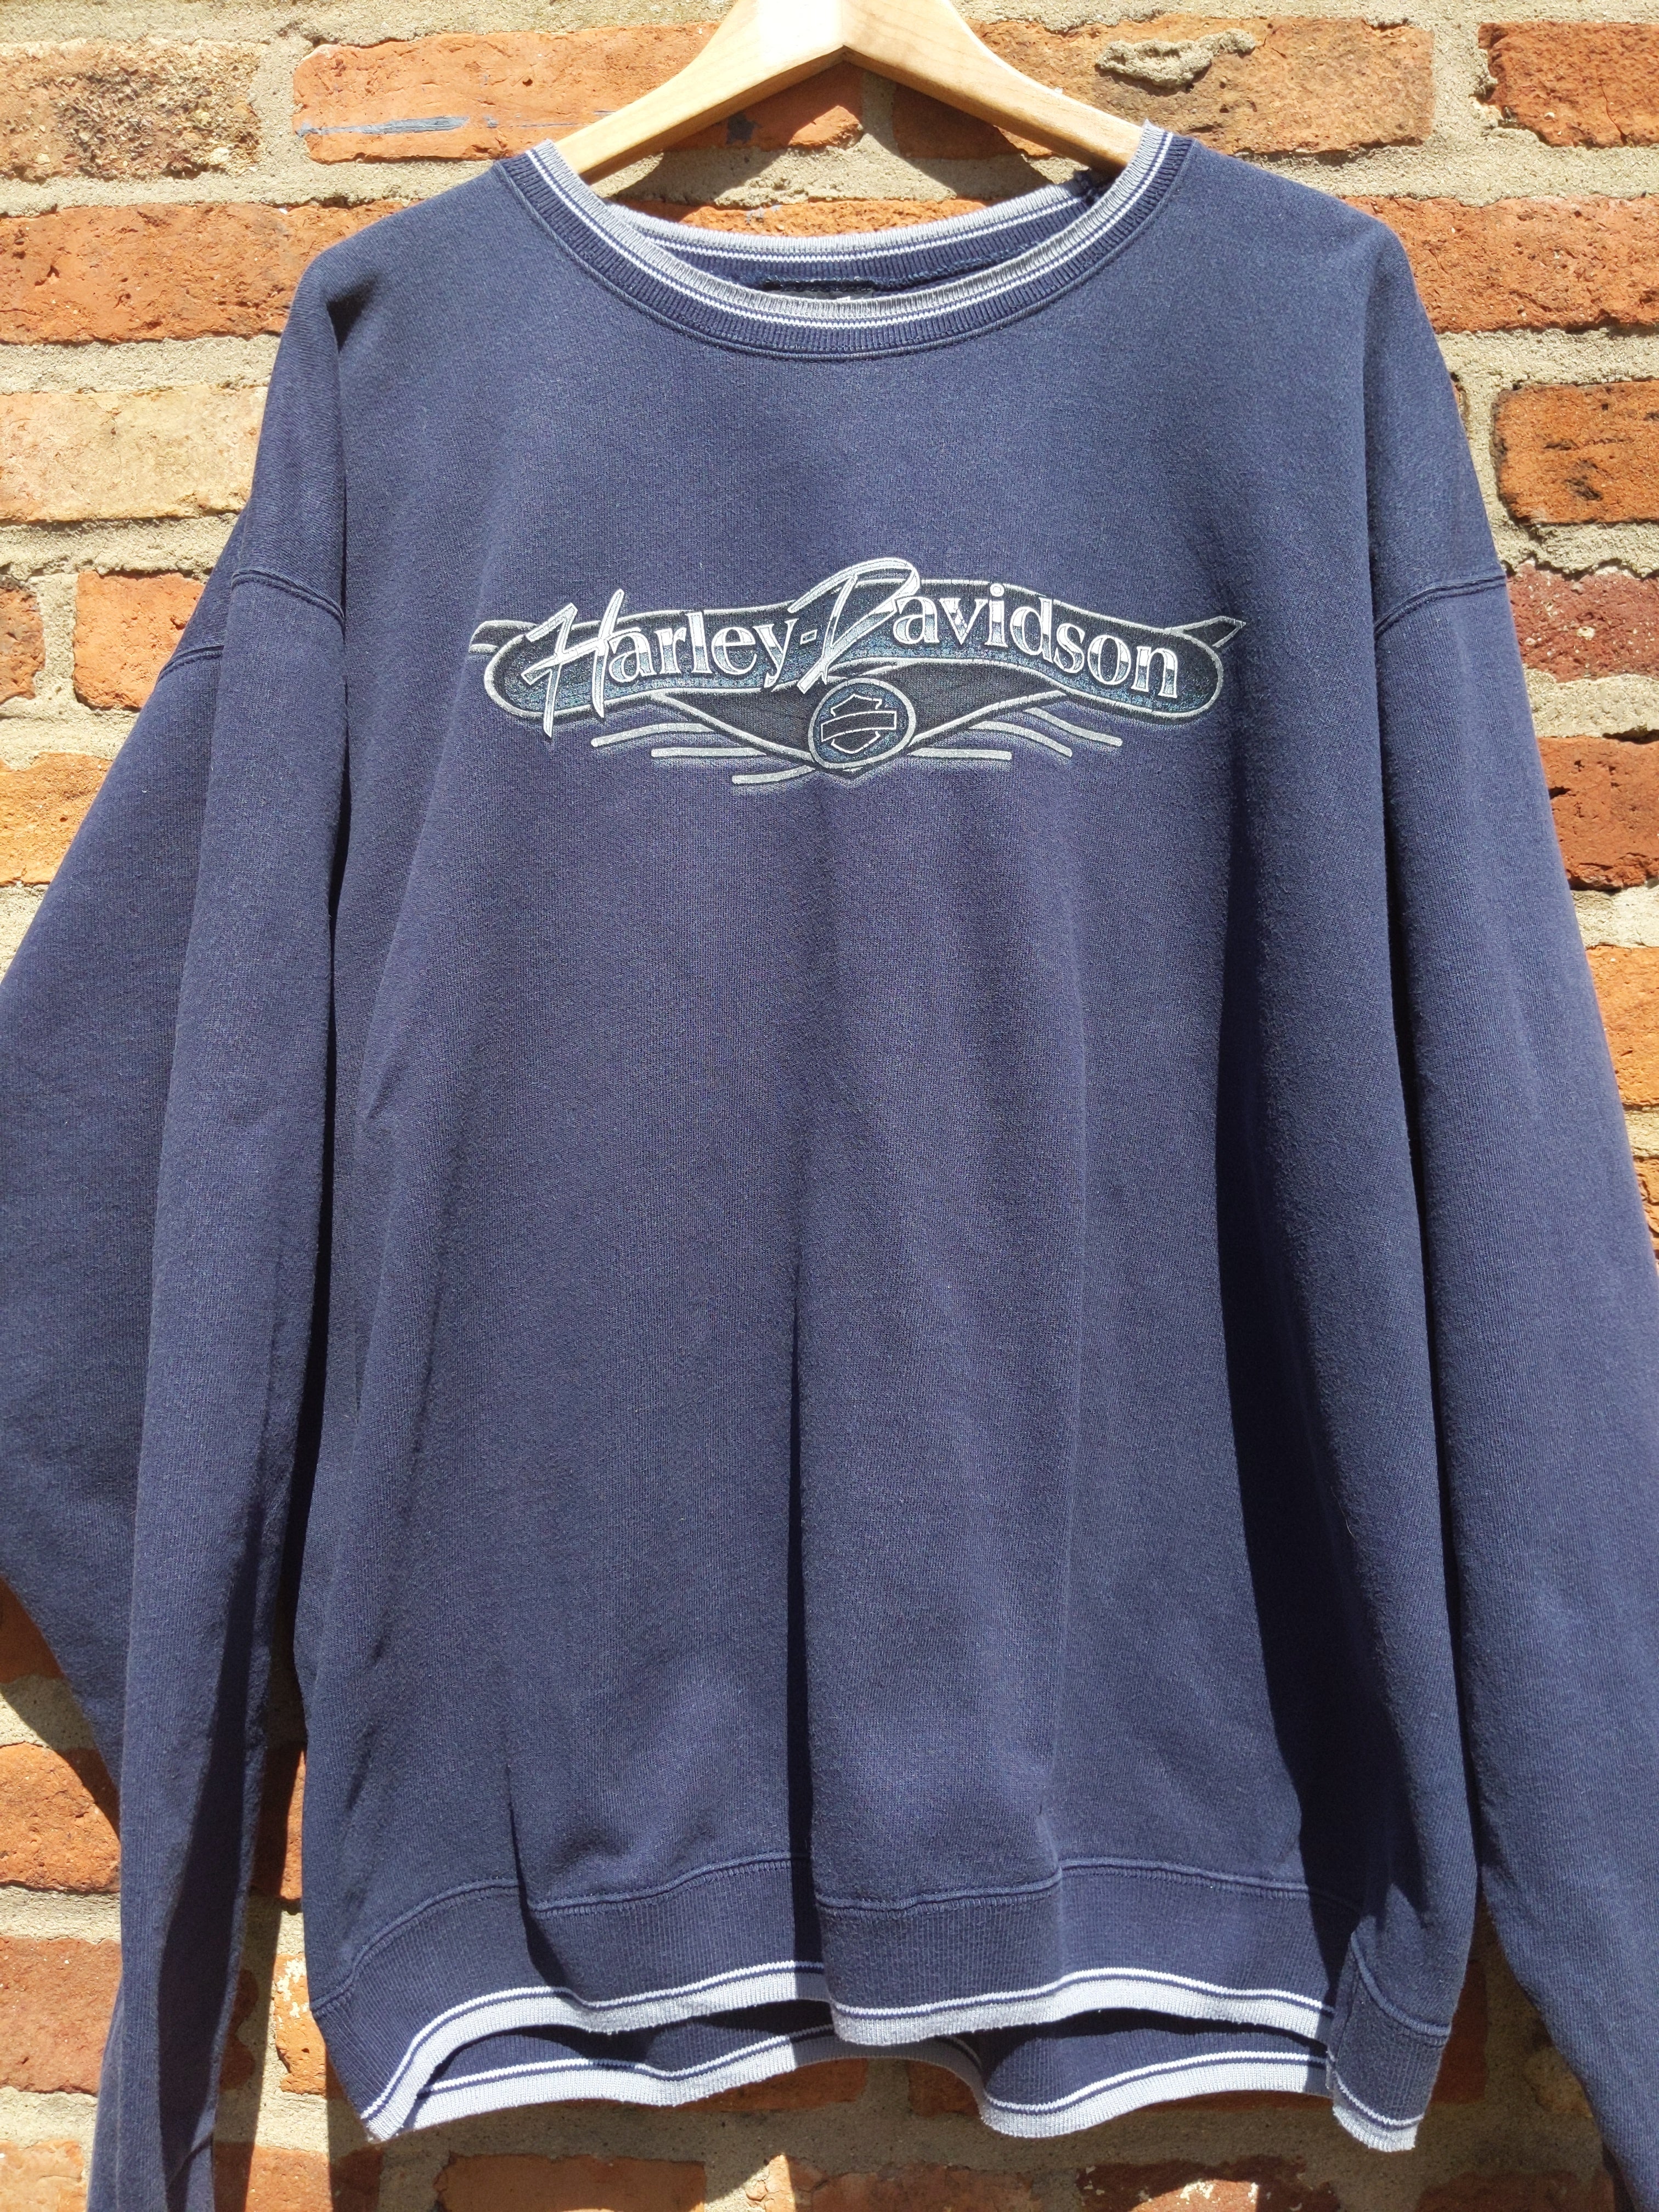 Retro Harley Davidson mile high sweatshirt XL